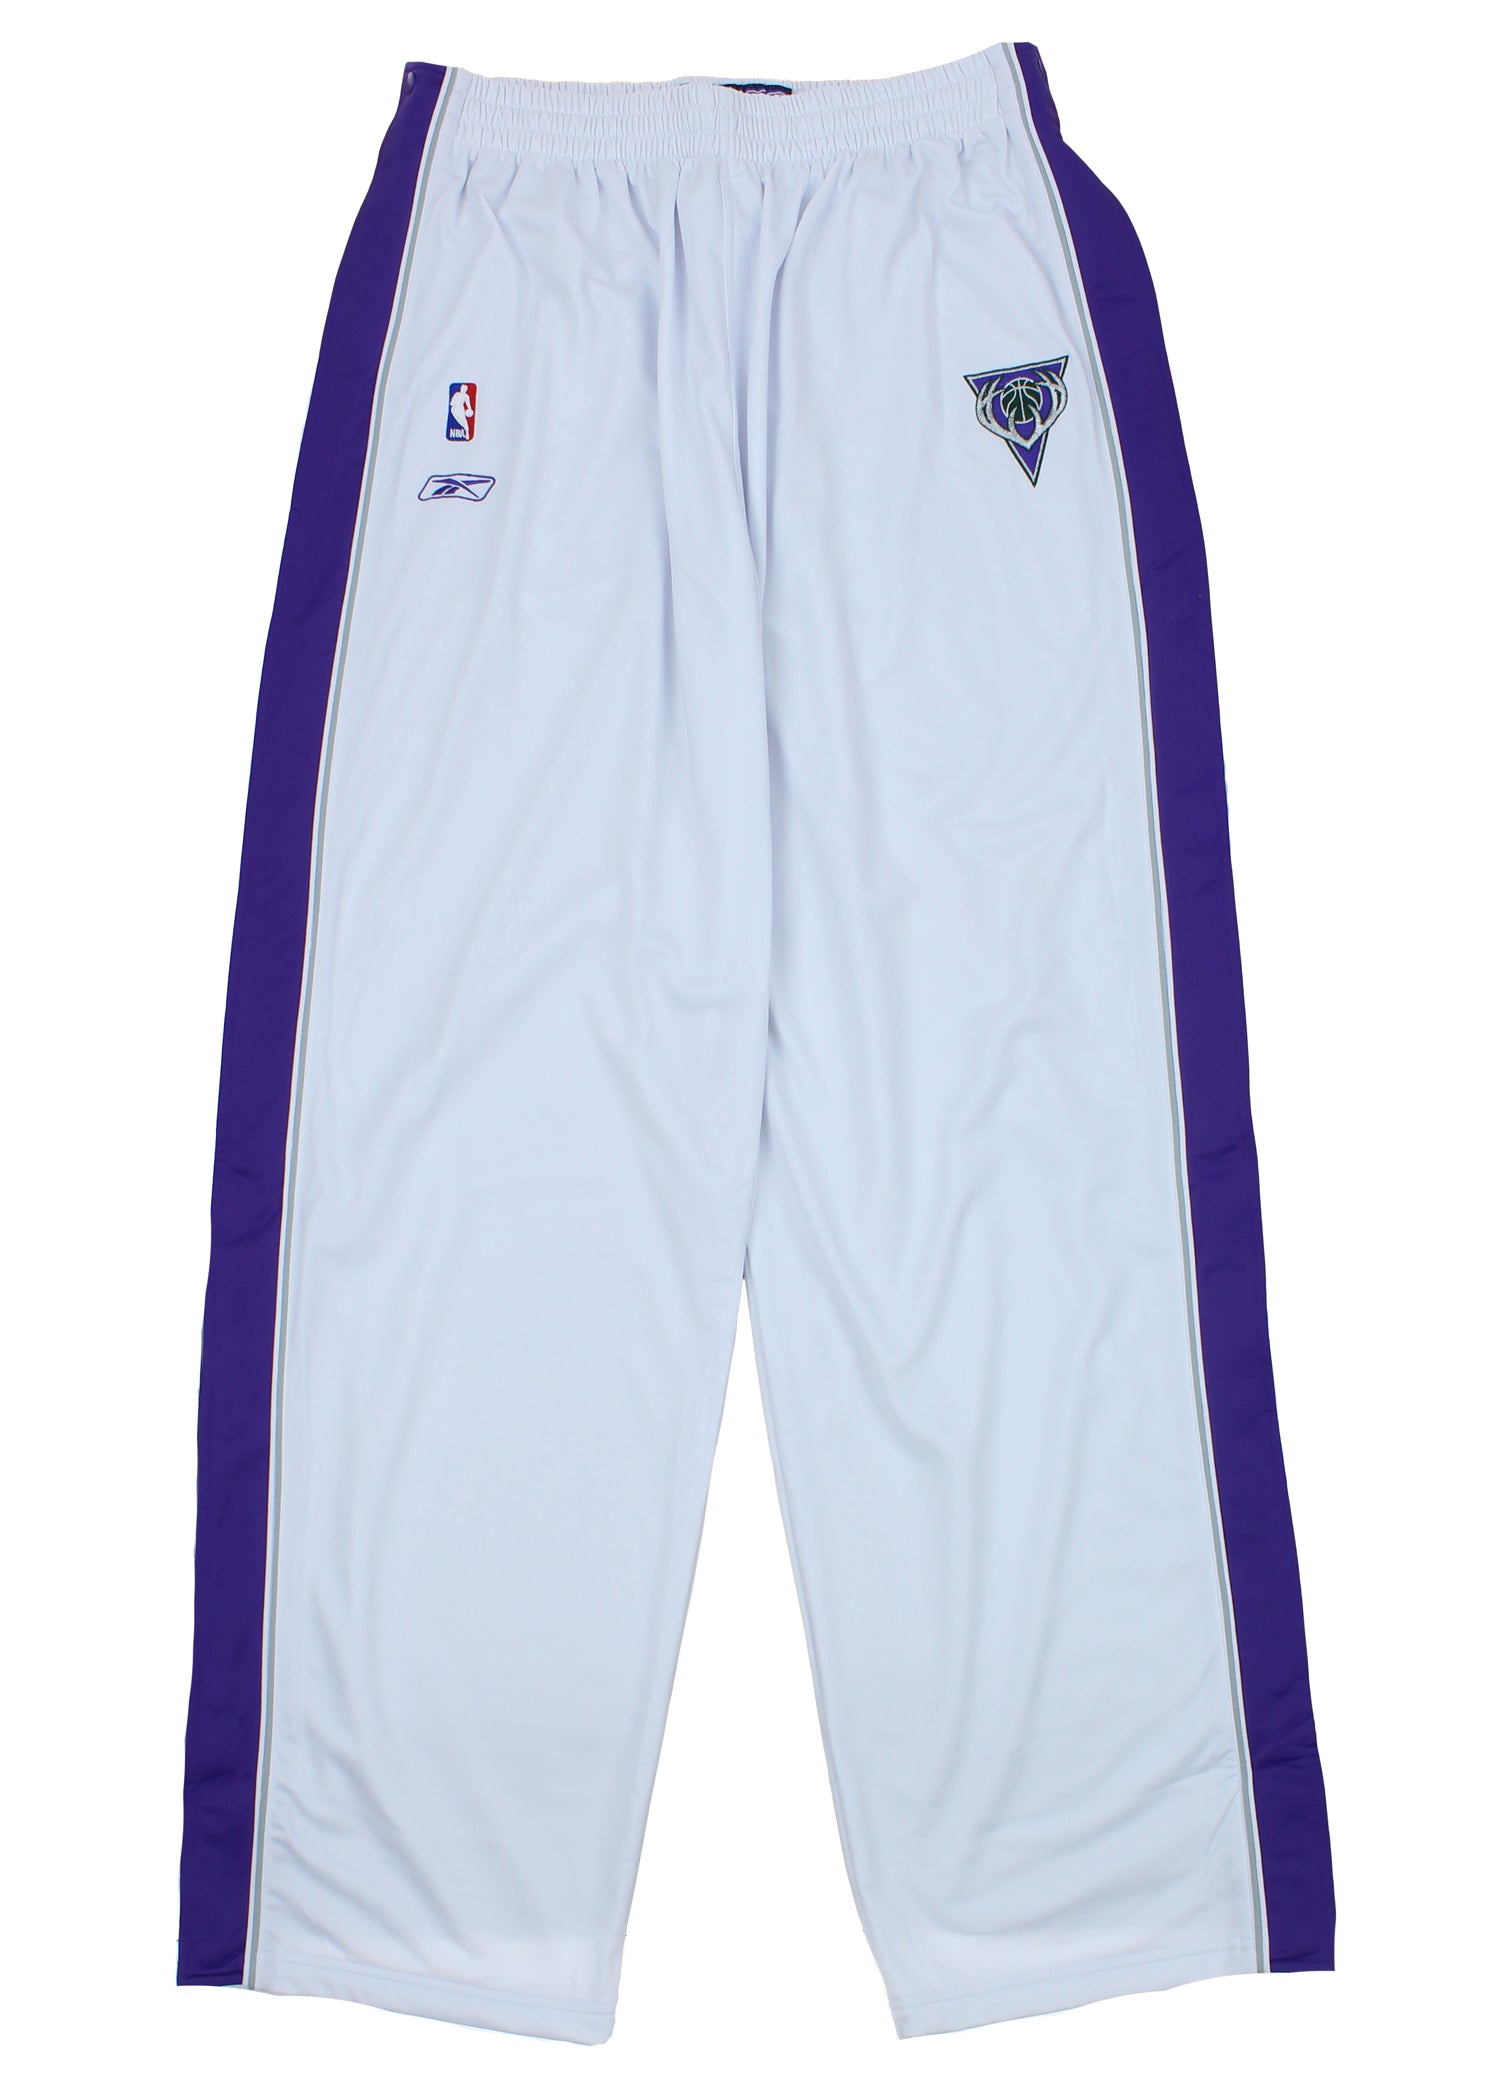 NWT Nike x Ambush NBA collection Lakers Tearaway Pants size S DB1636-121  $200 | eBay